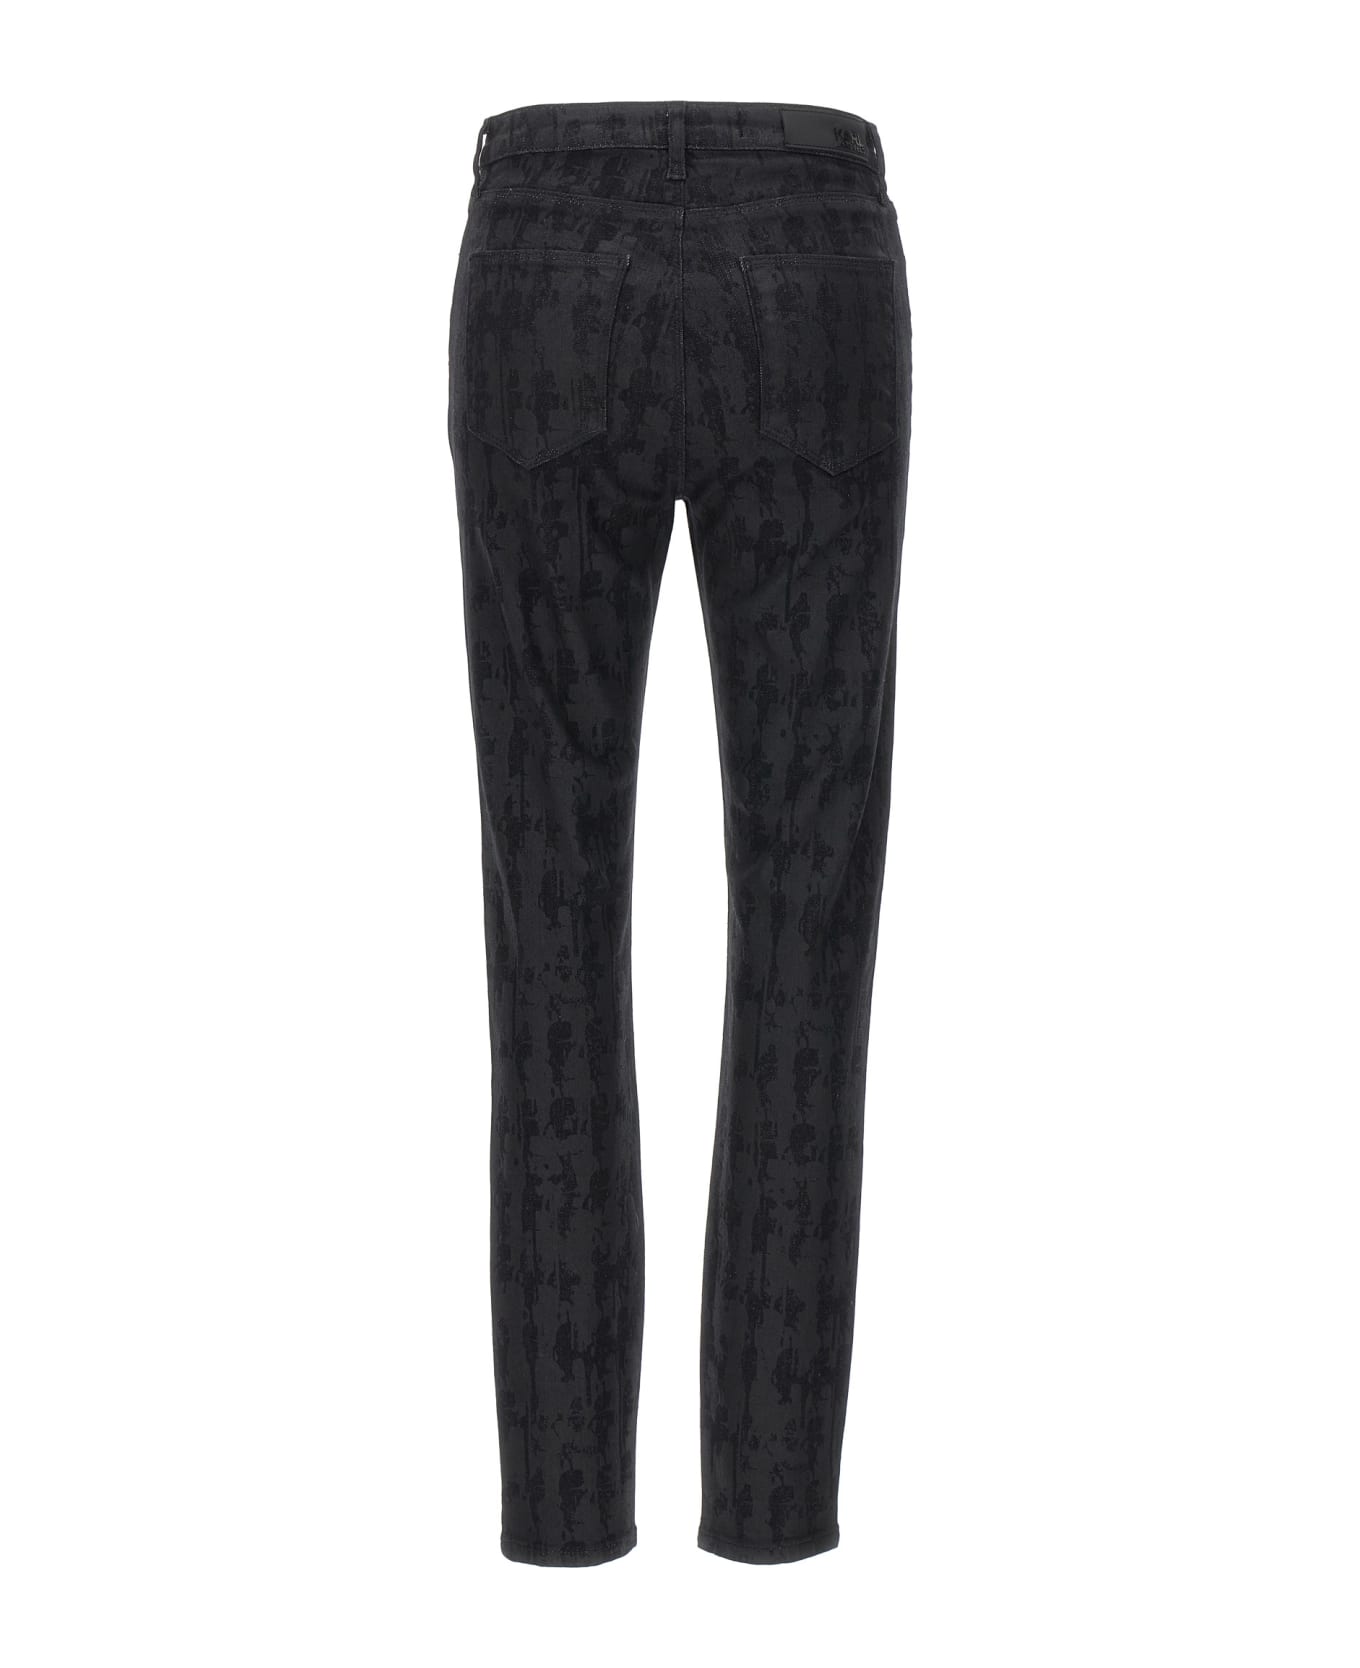 Karl Lagerfeld 'aop' Jeans - Black  